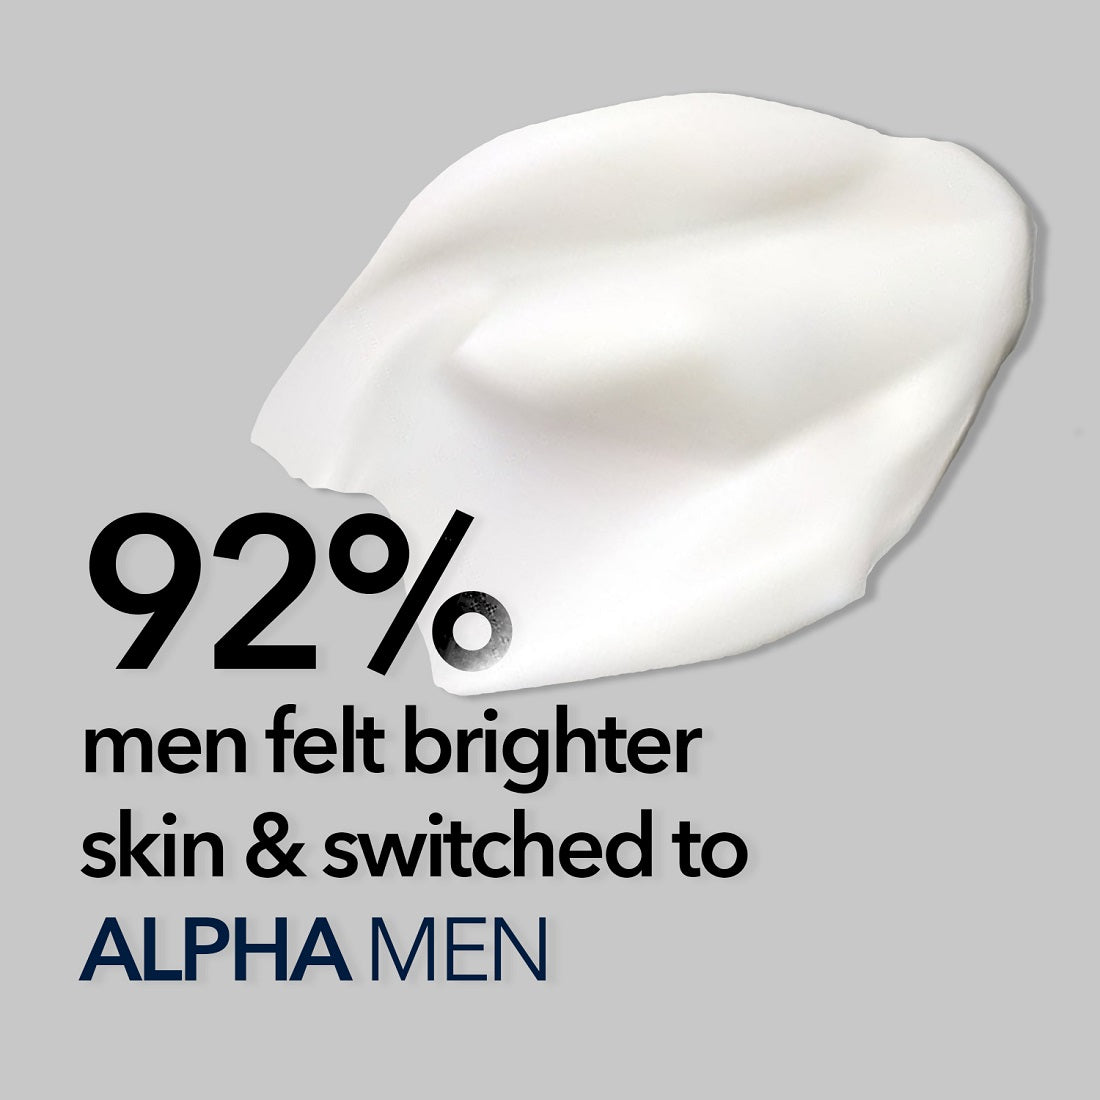 ALPHA MEN Bright Glow Face Wash (50g)